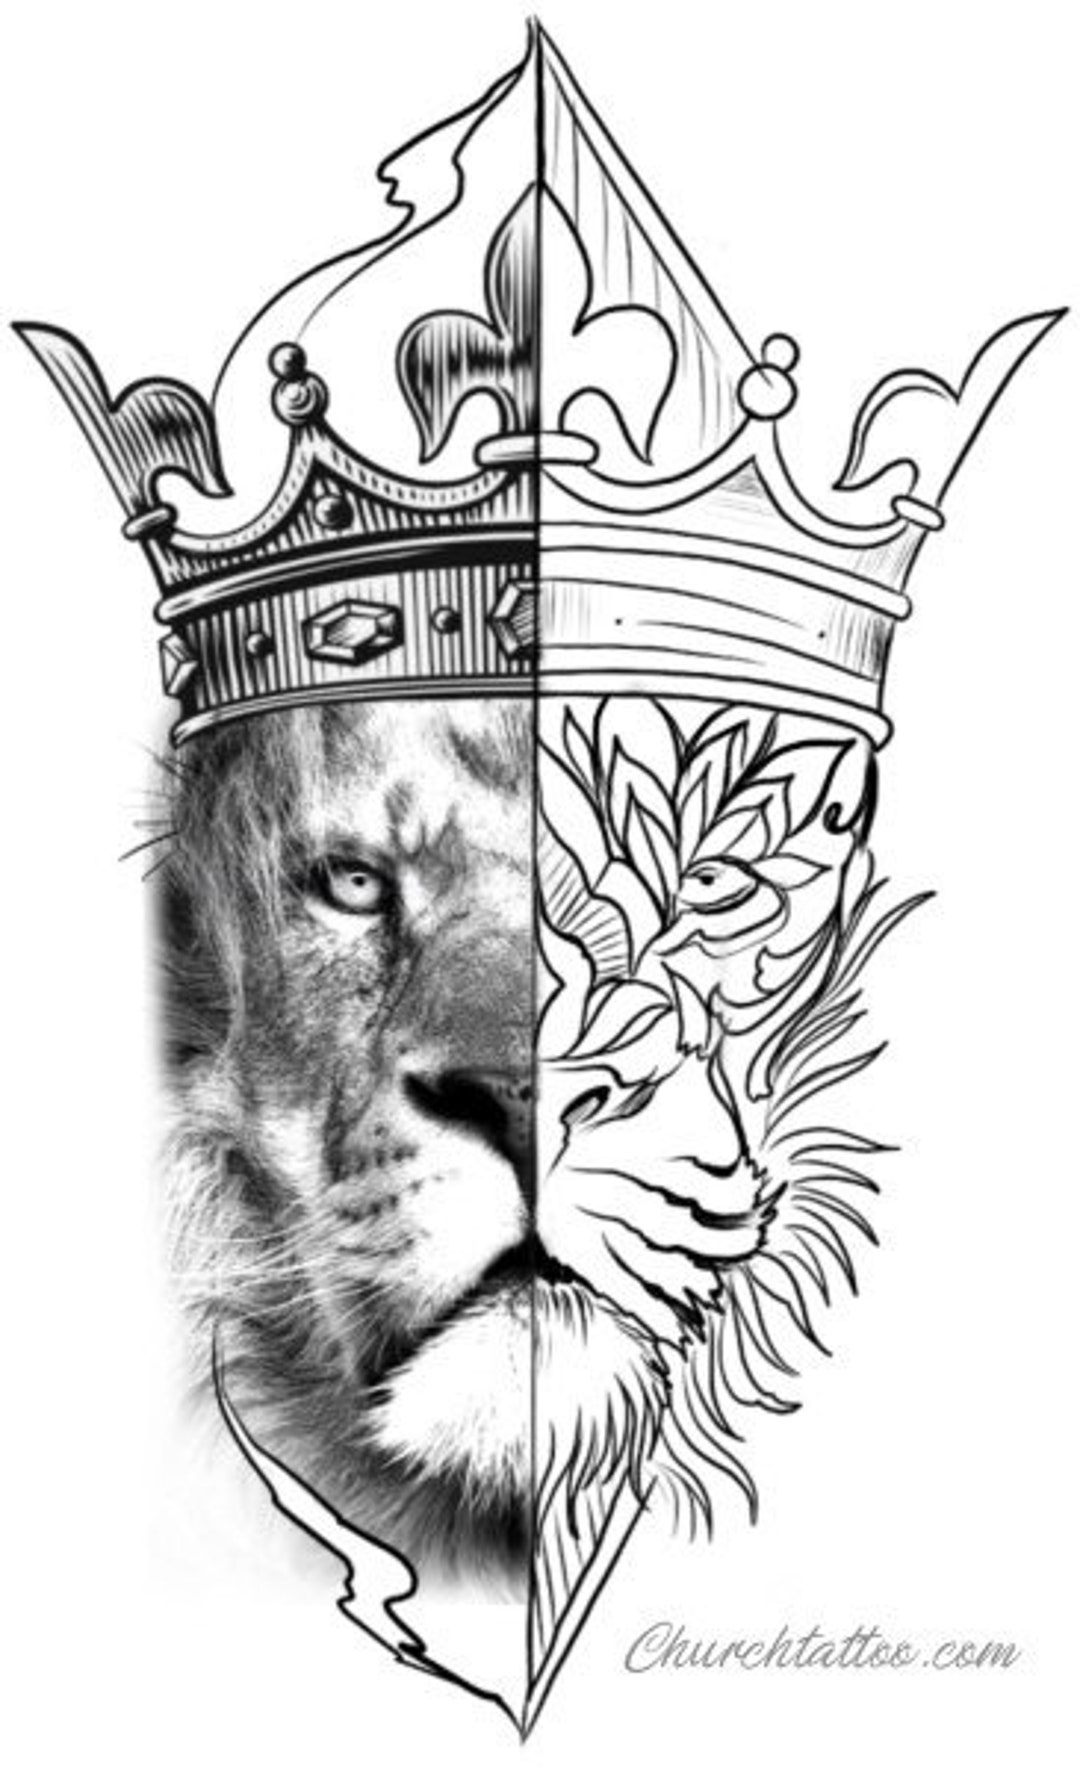 51 Best Lion Tattoos For Men Cool Designs  Ideas 2019 Guide  King  tattoos Mens lion tattoo Crown tattoo design